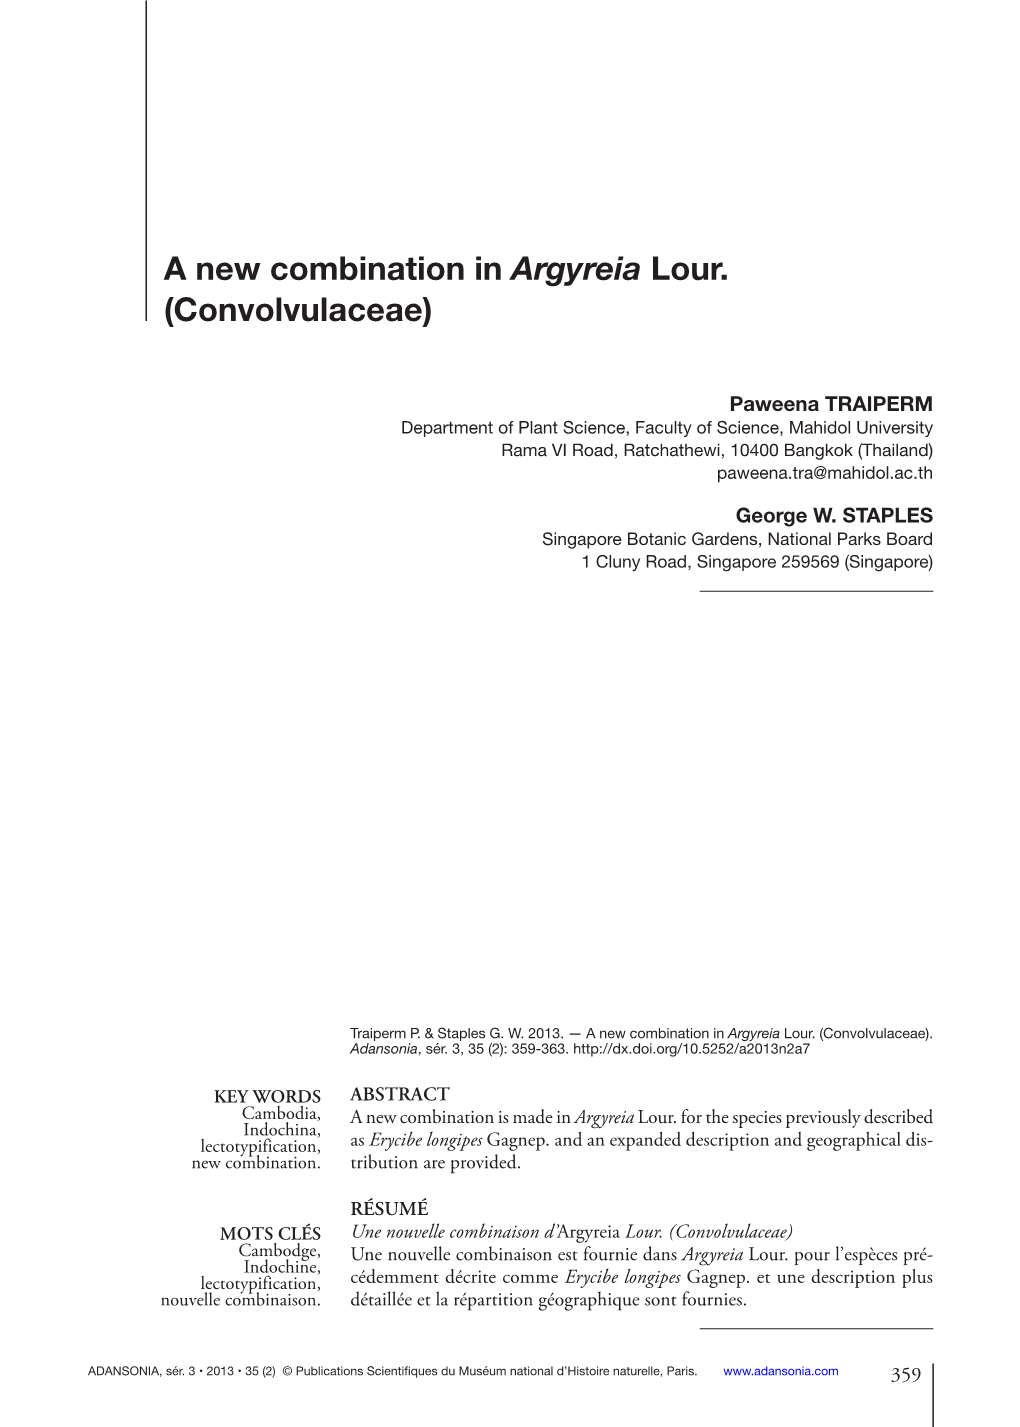 A New Combination in Argyreia Lour. (Convolvulaceae)